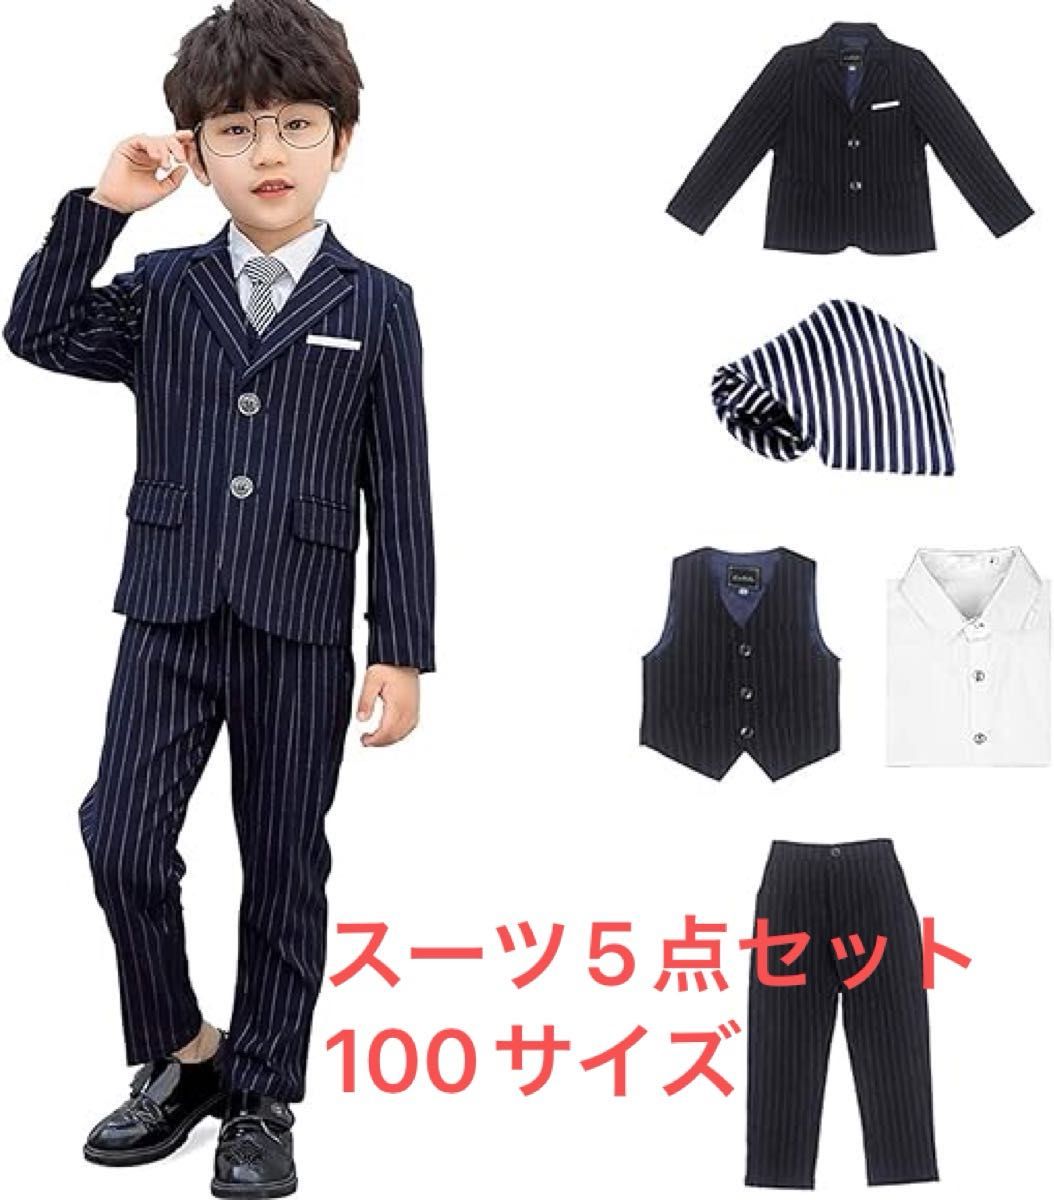 [LUlala] 子供スーツ 男の子 子供フォーマル 入学式 卒業式 スーツ 5点セット 七五三 キッズスーツ 100 ストライプ